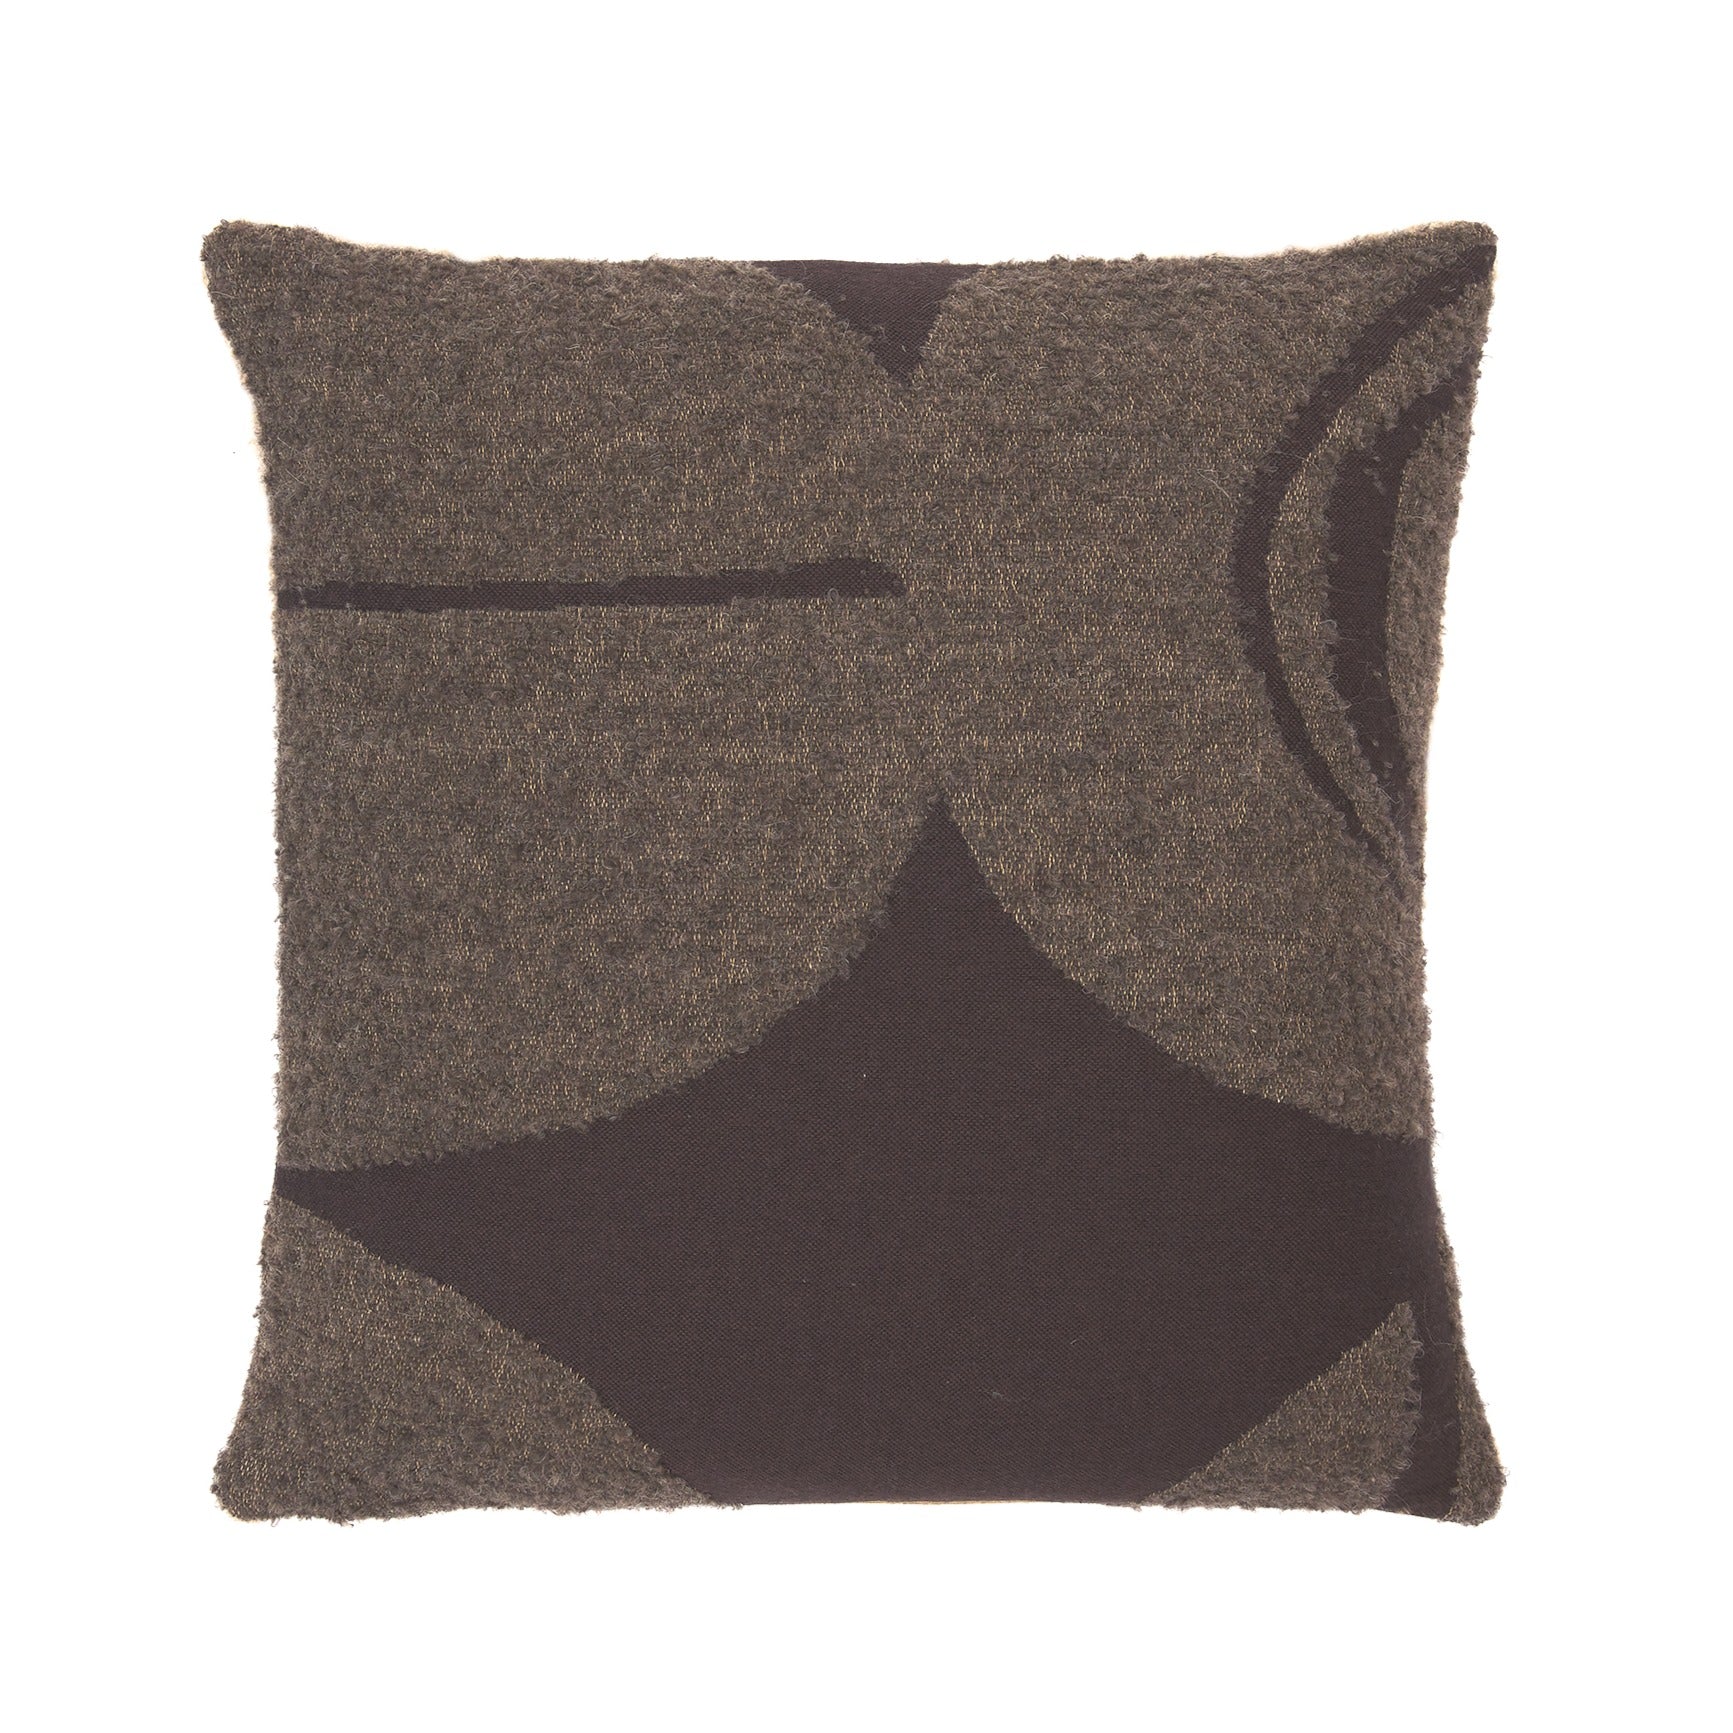 Moro Orb cushion